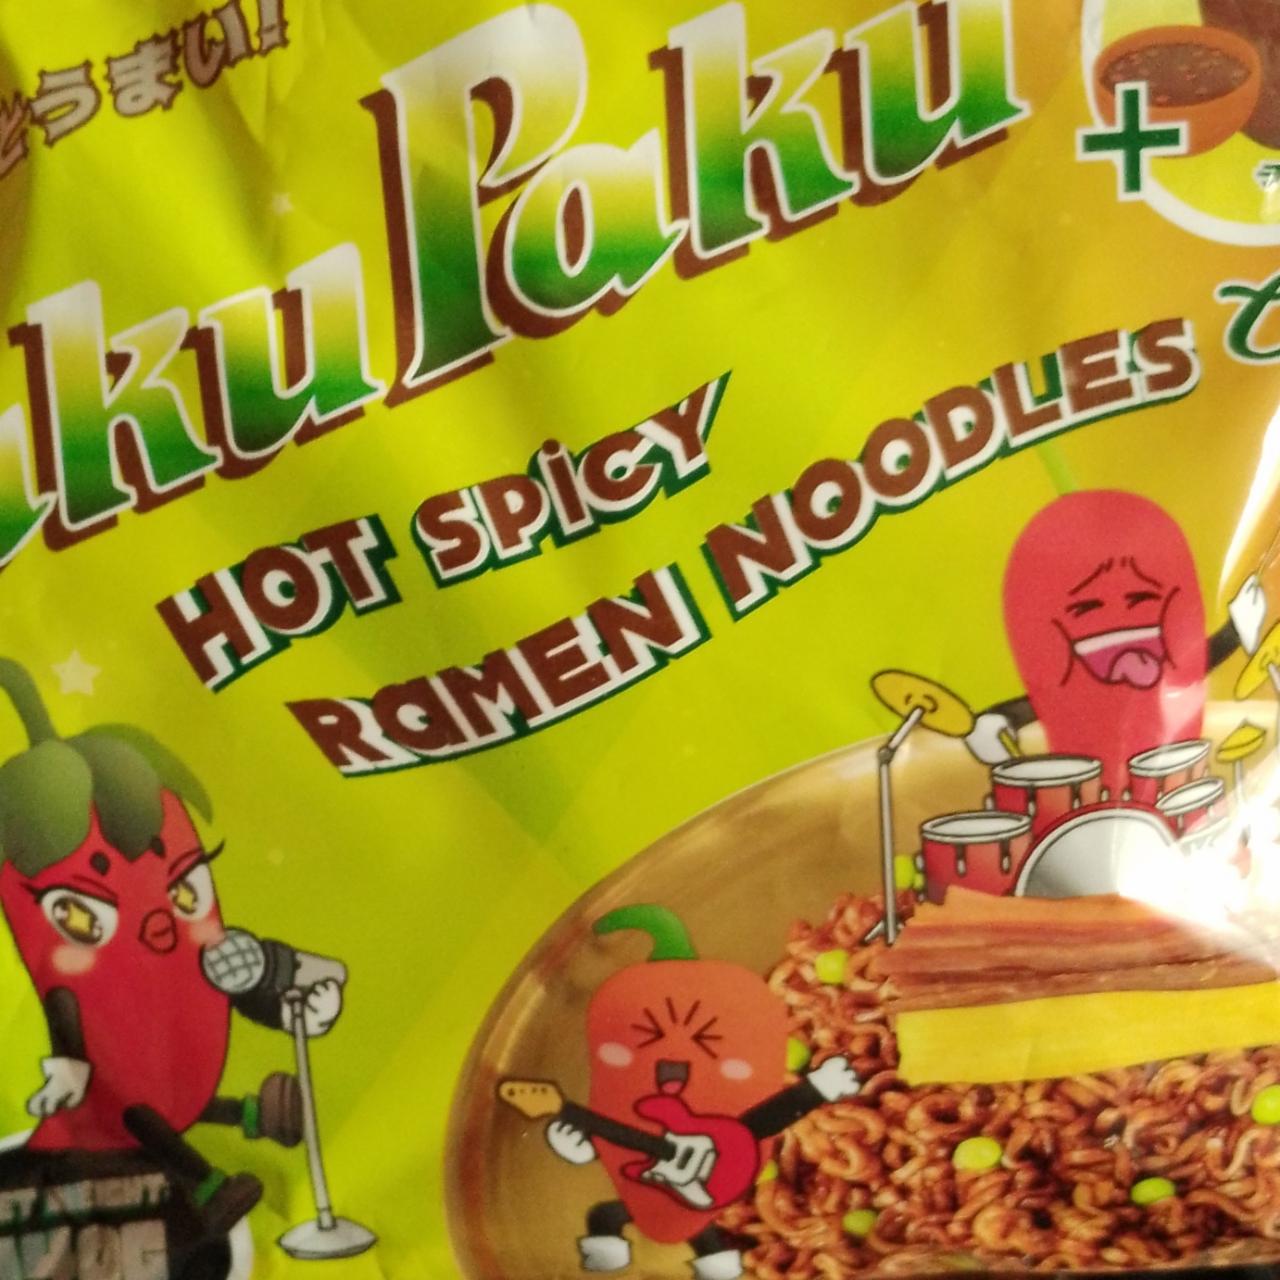 Fotografie - Hot Spicy Ramen noodles PakuPaku